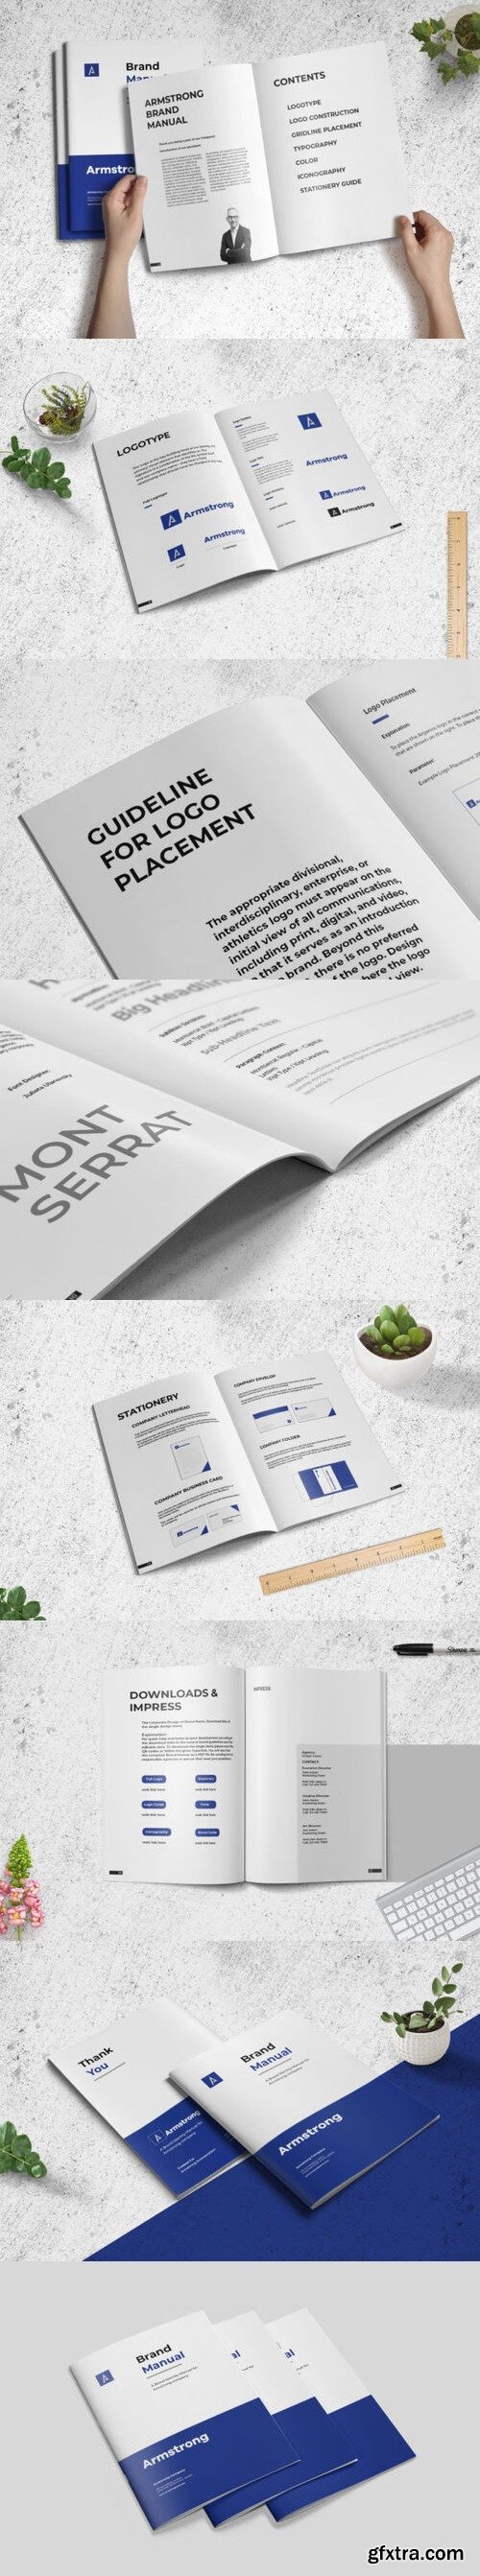 Brand Guideline Template Brochure